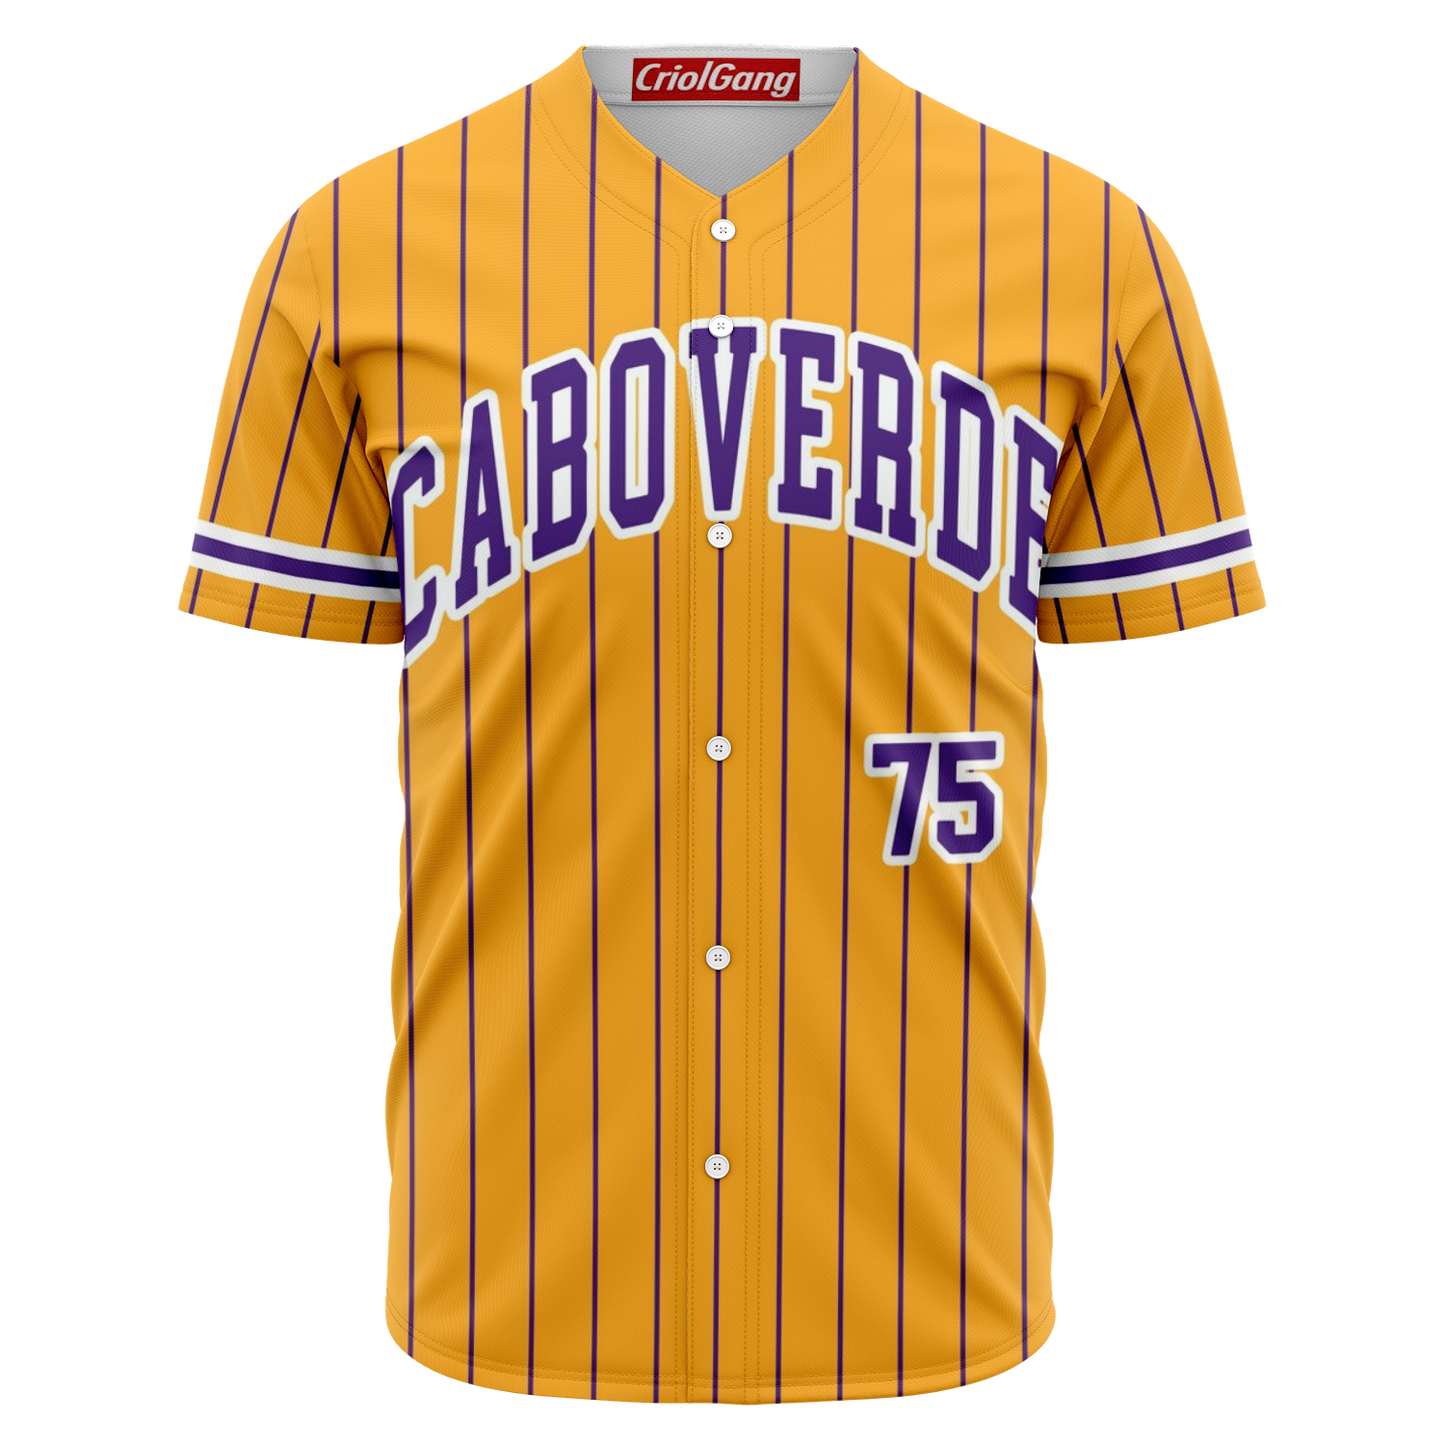 Cabo Verde baseball jersey  yellow & purple "CABOGANG" - CVC Streetwear